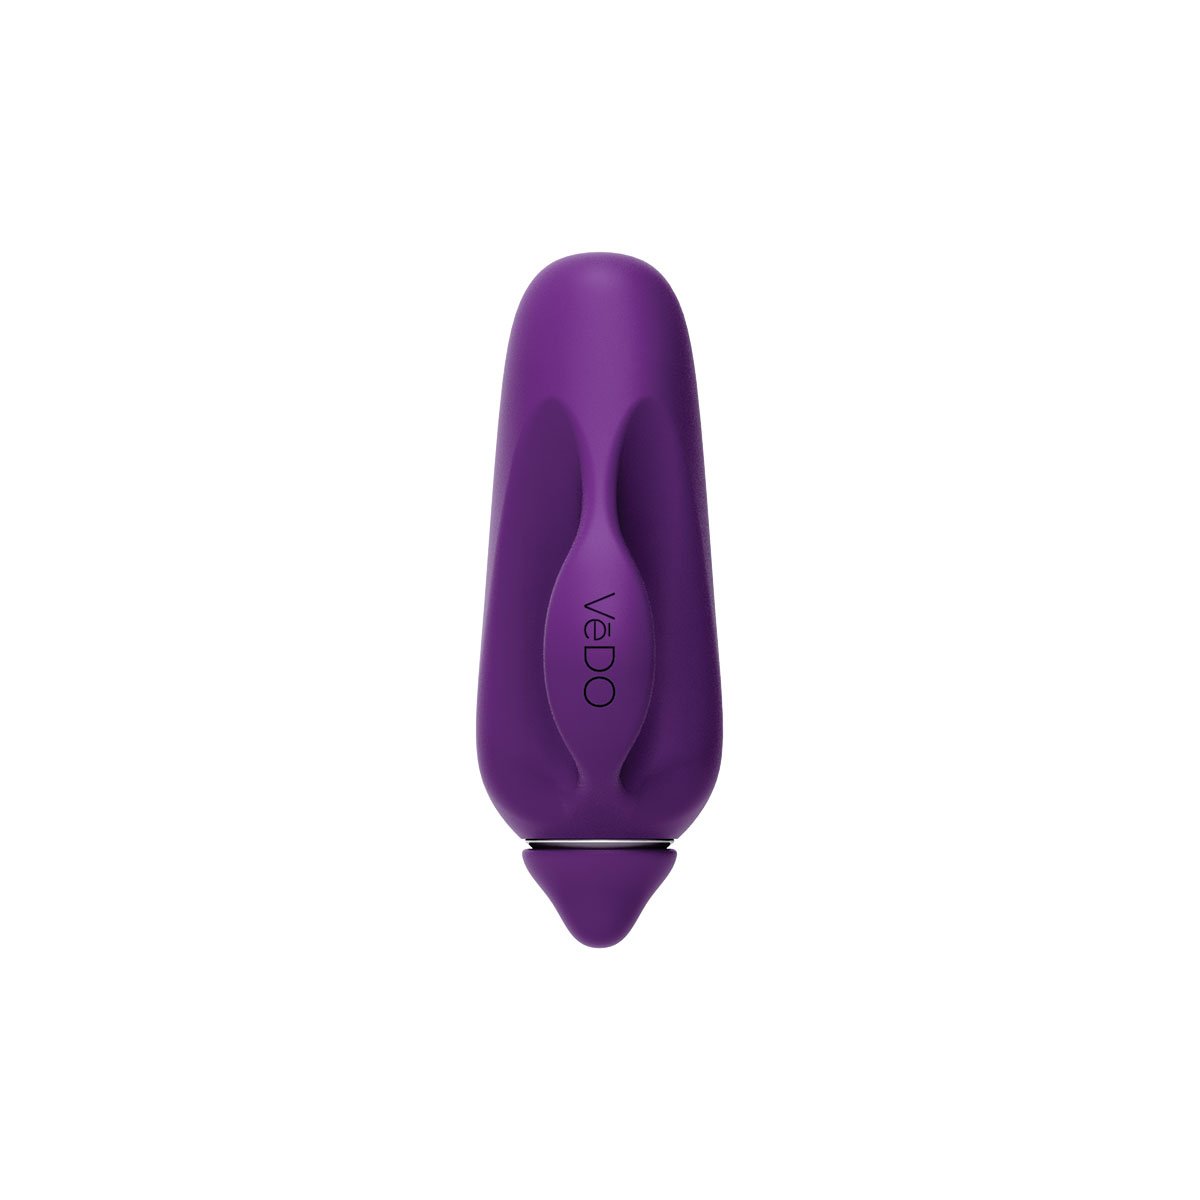 VeDO Vivi Finger Vibe - Buy At Luxury Toy X - Free 3-Day Shipping